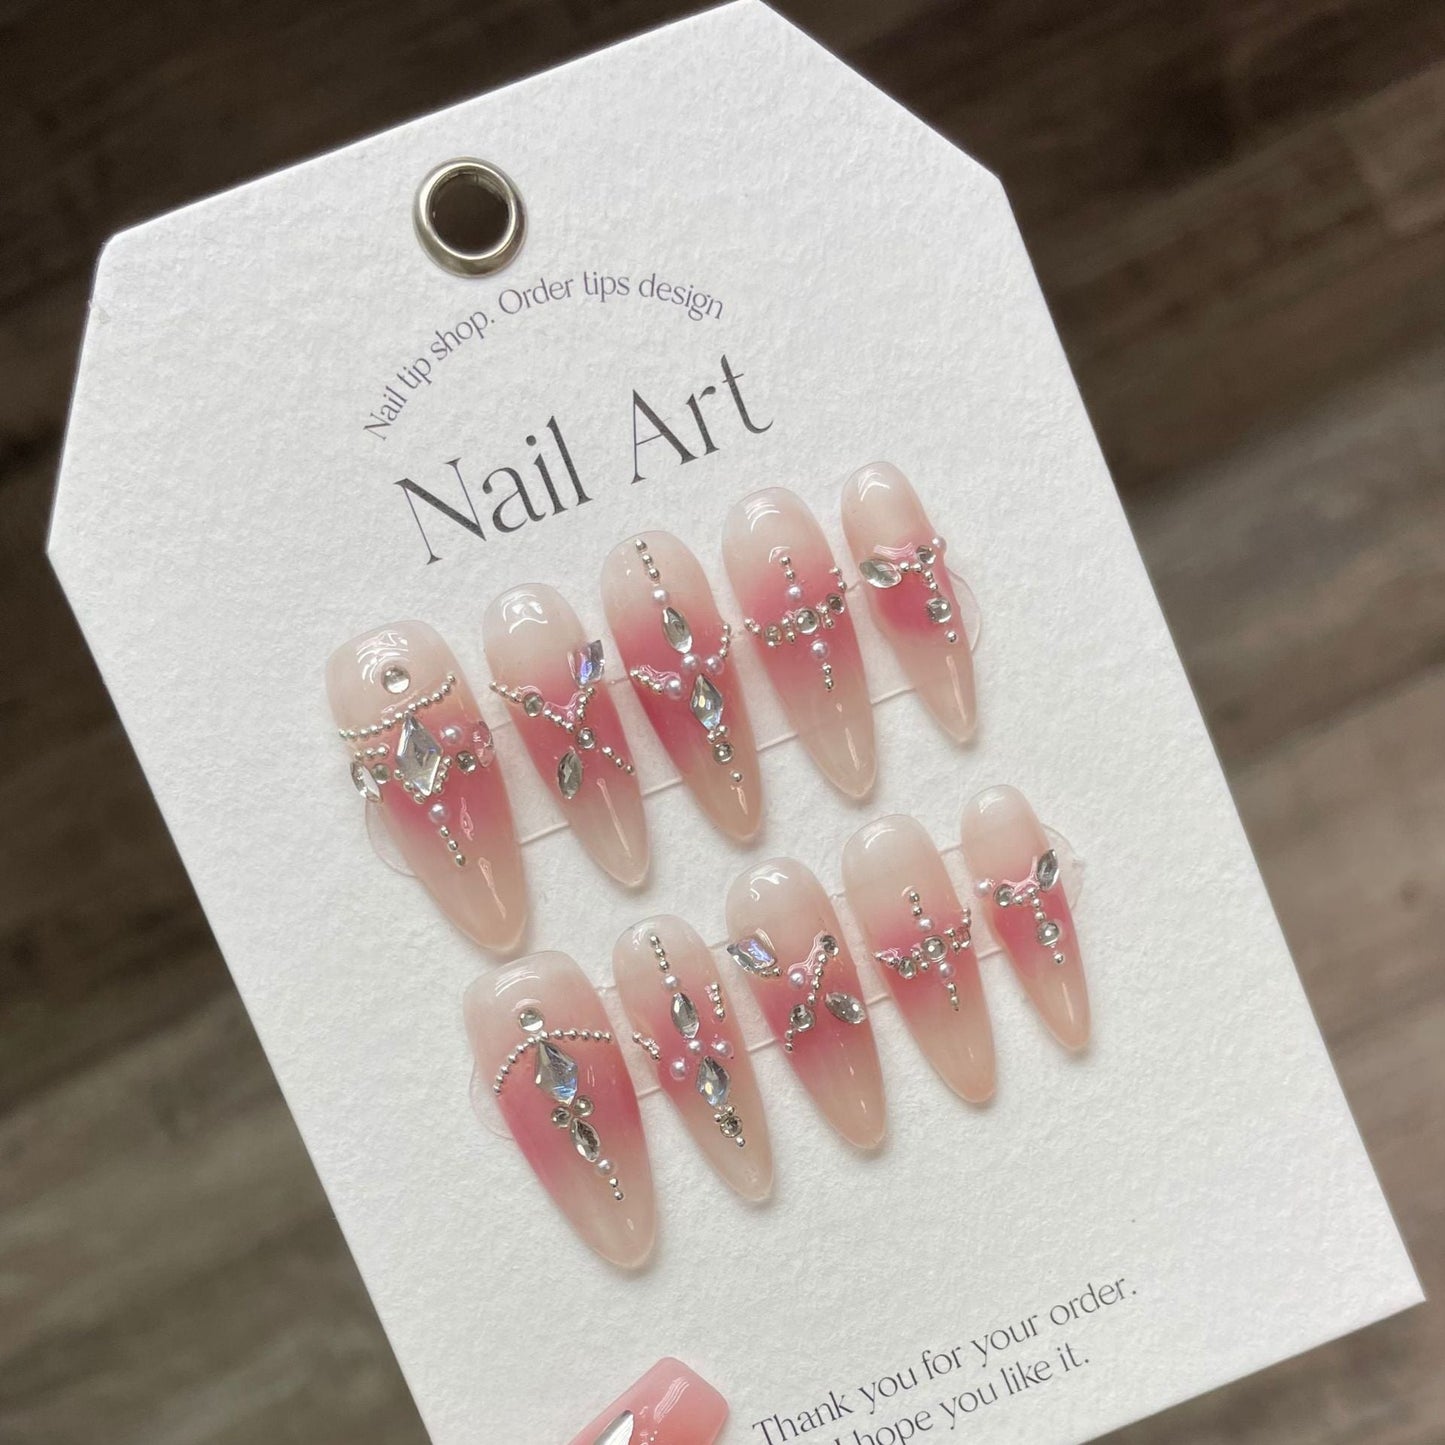 954/957 young girl style press on nails 100% handmade false nails pink